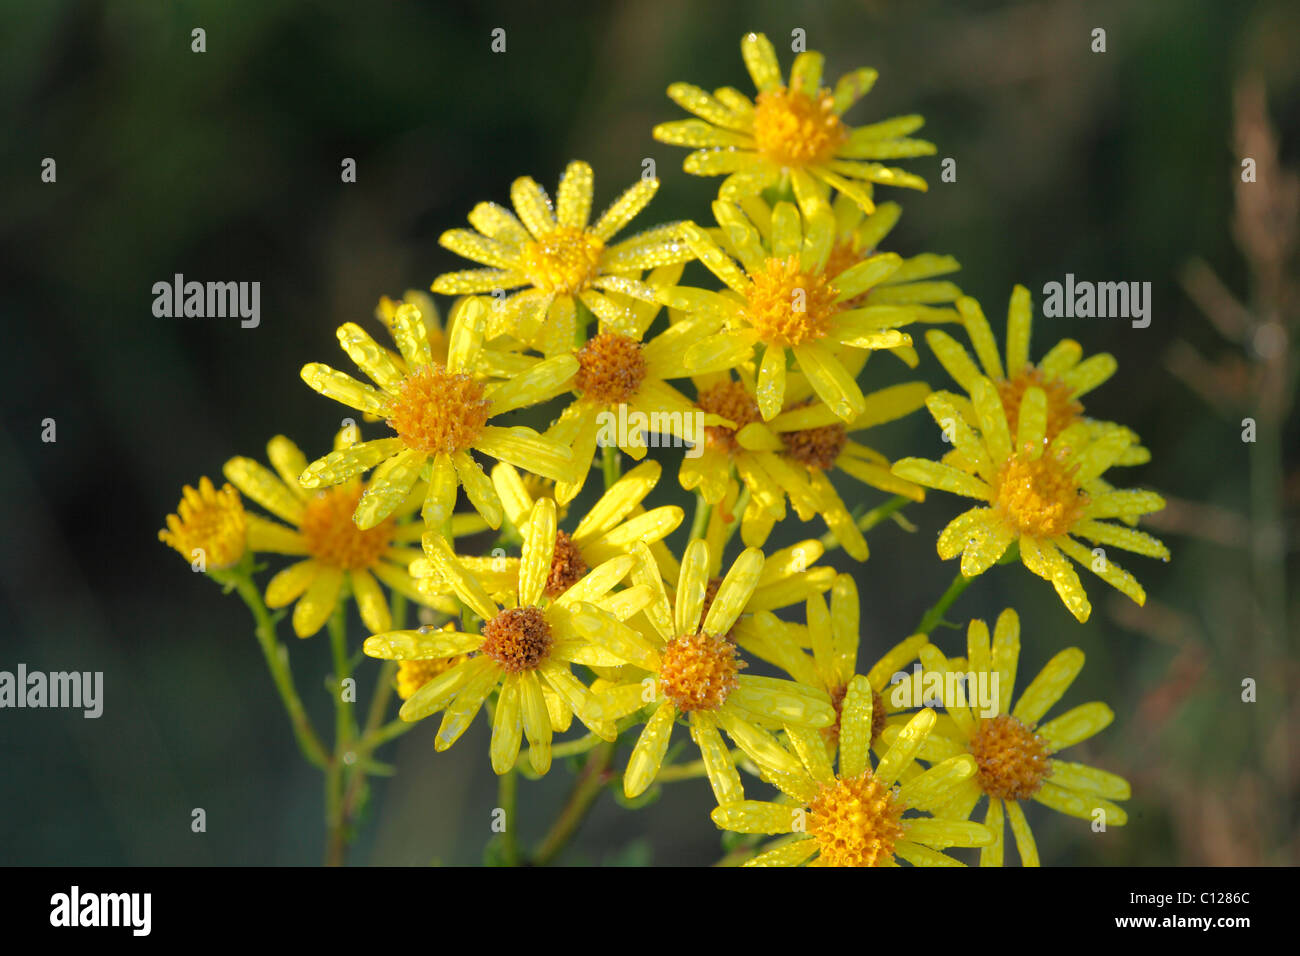 Flowers of Ragwort (Senecio jacobaea) with dewdrops, poisonous plant Stock Photo